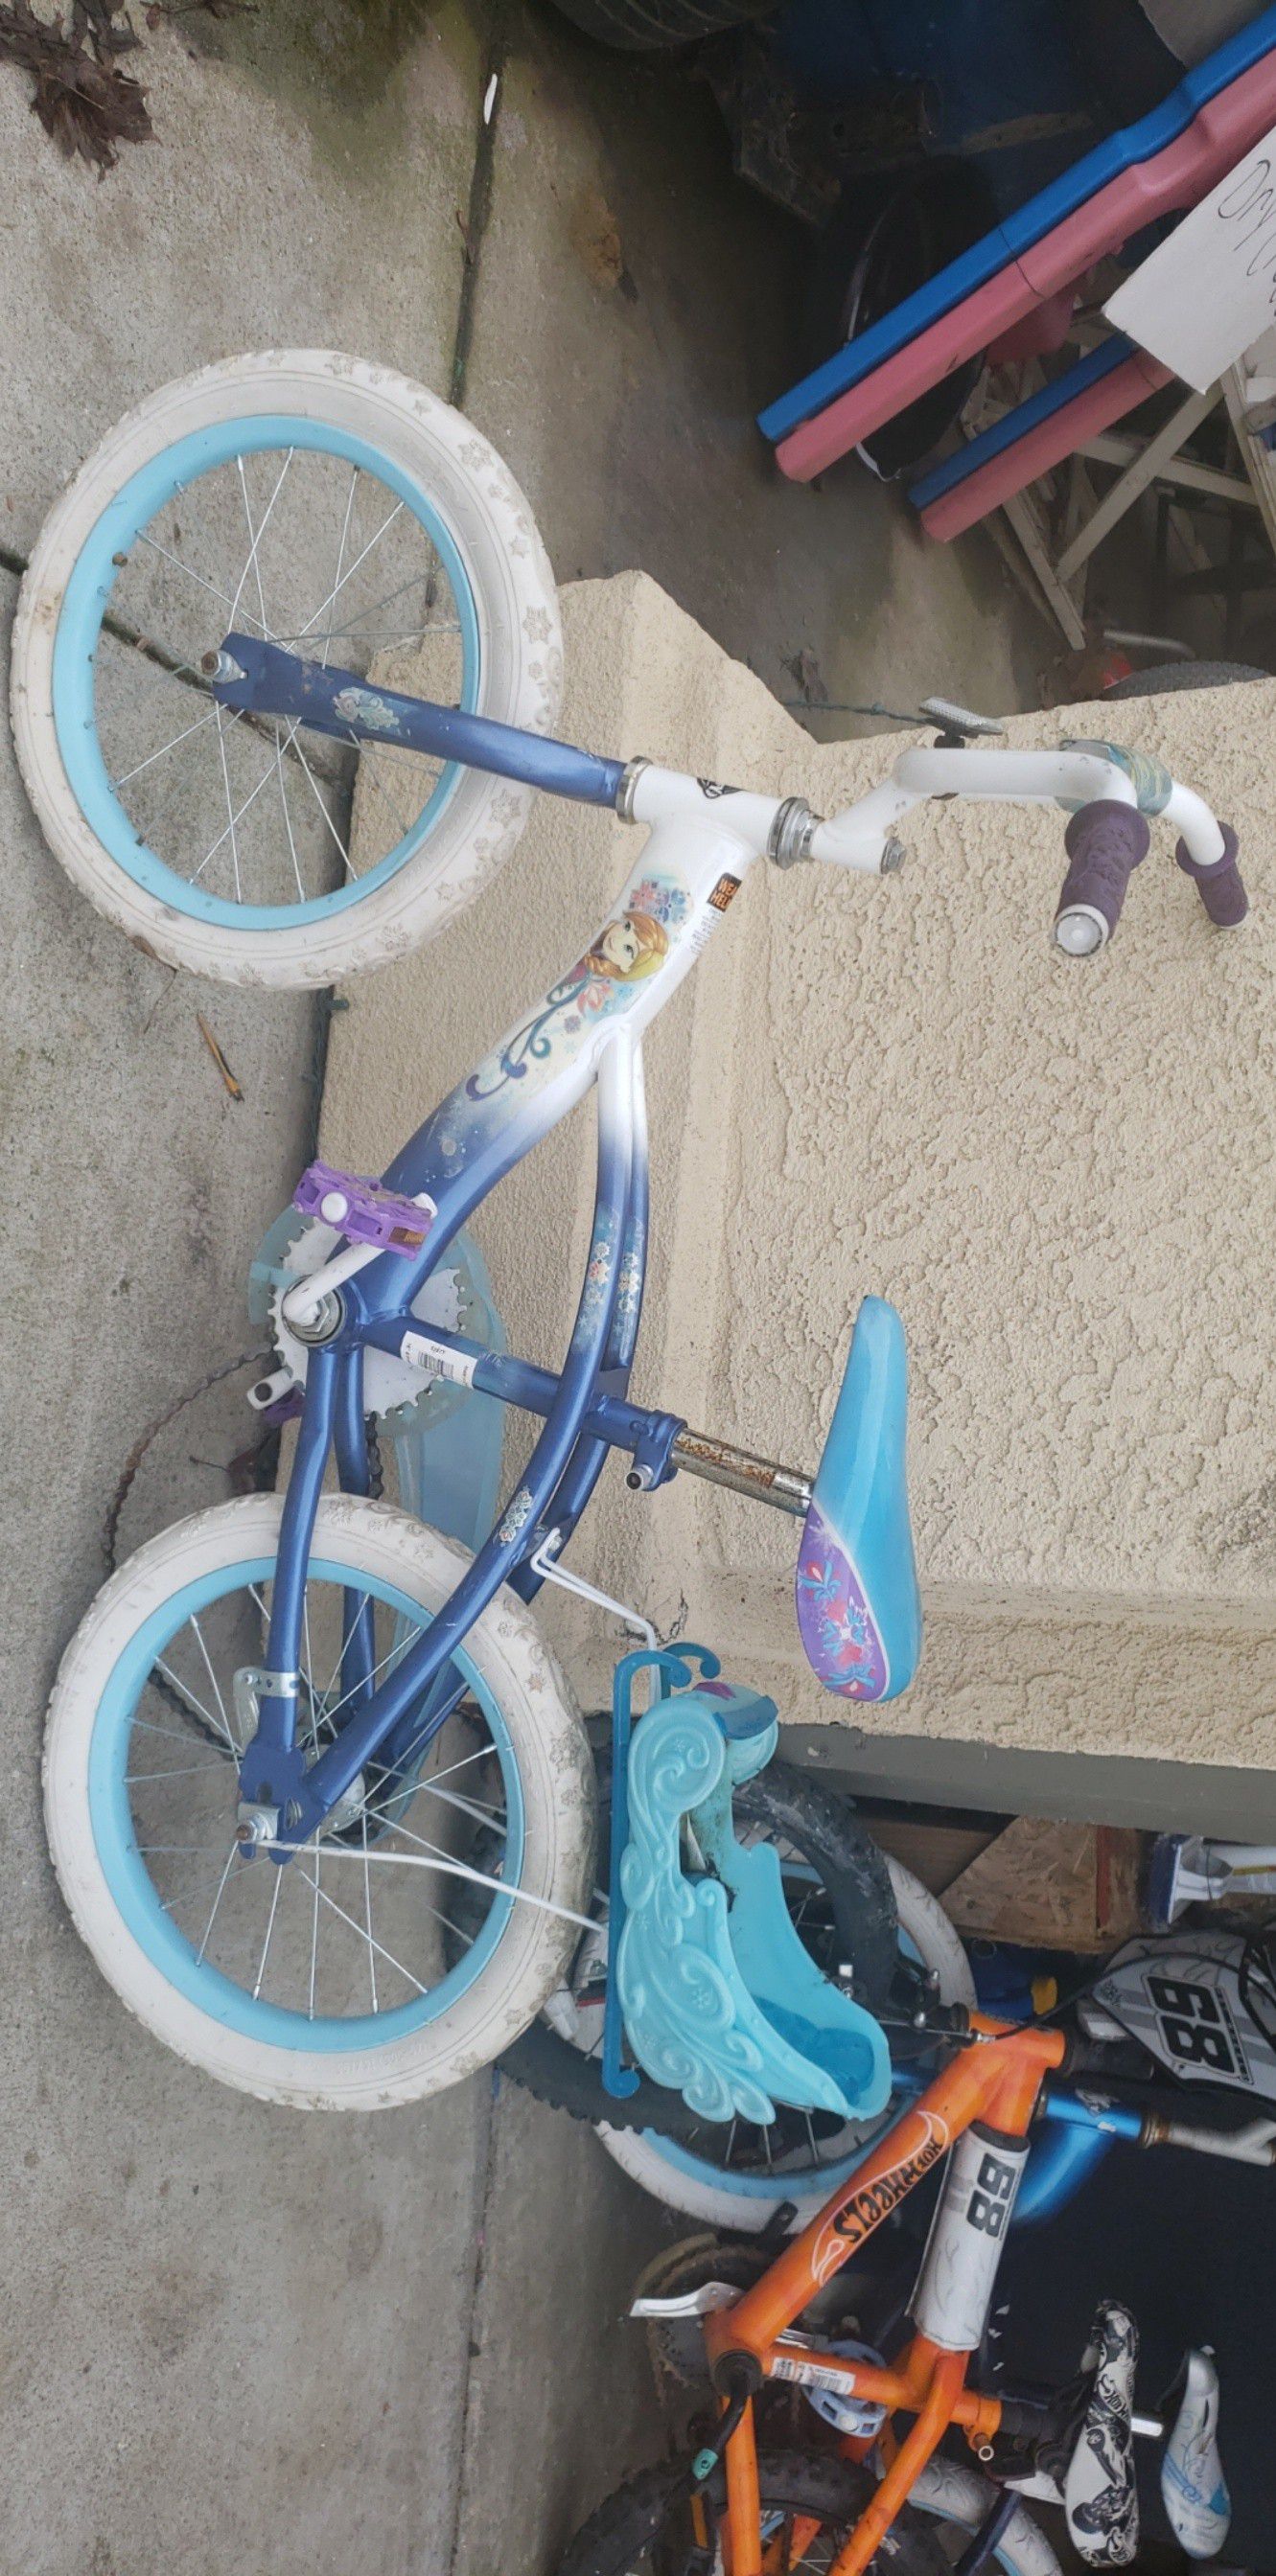 bikes for kids 7,8 years